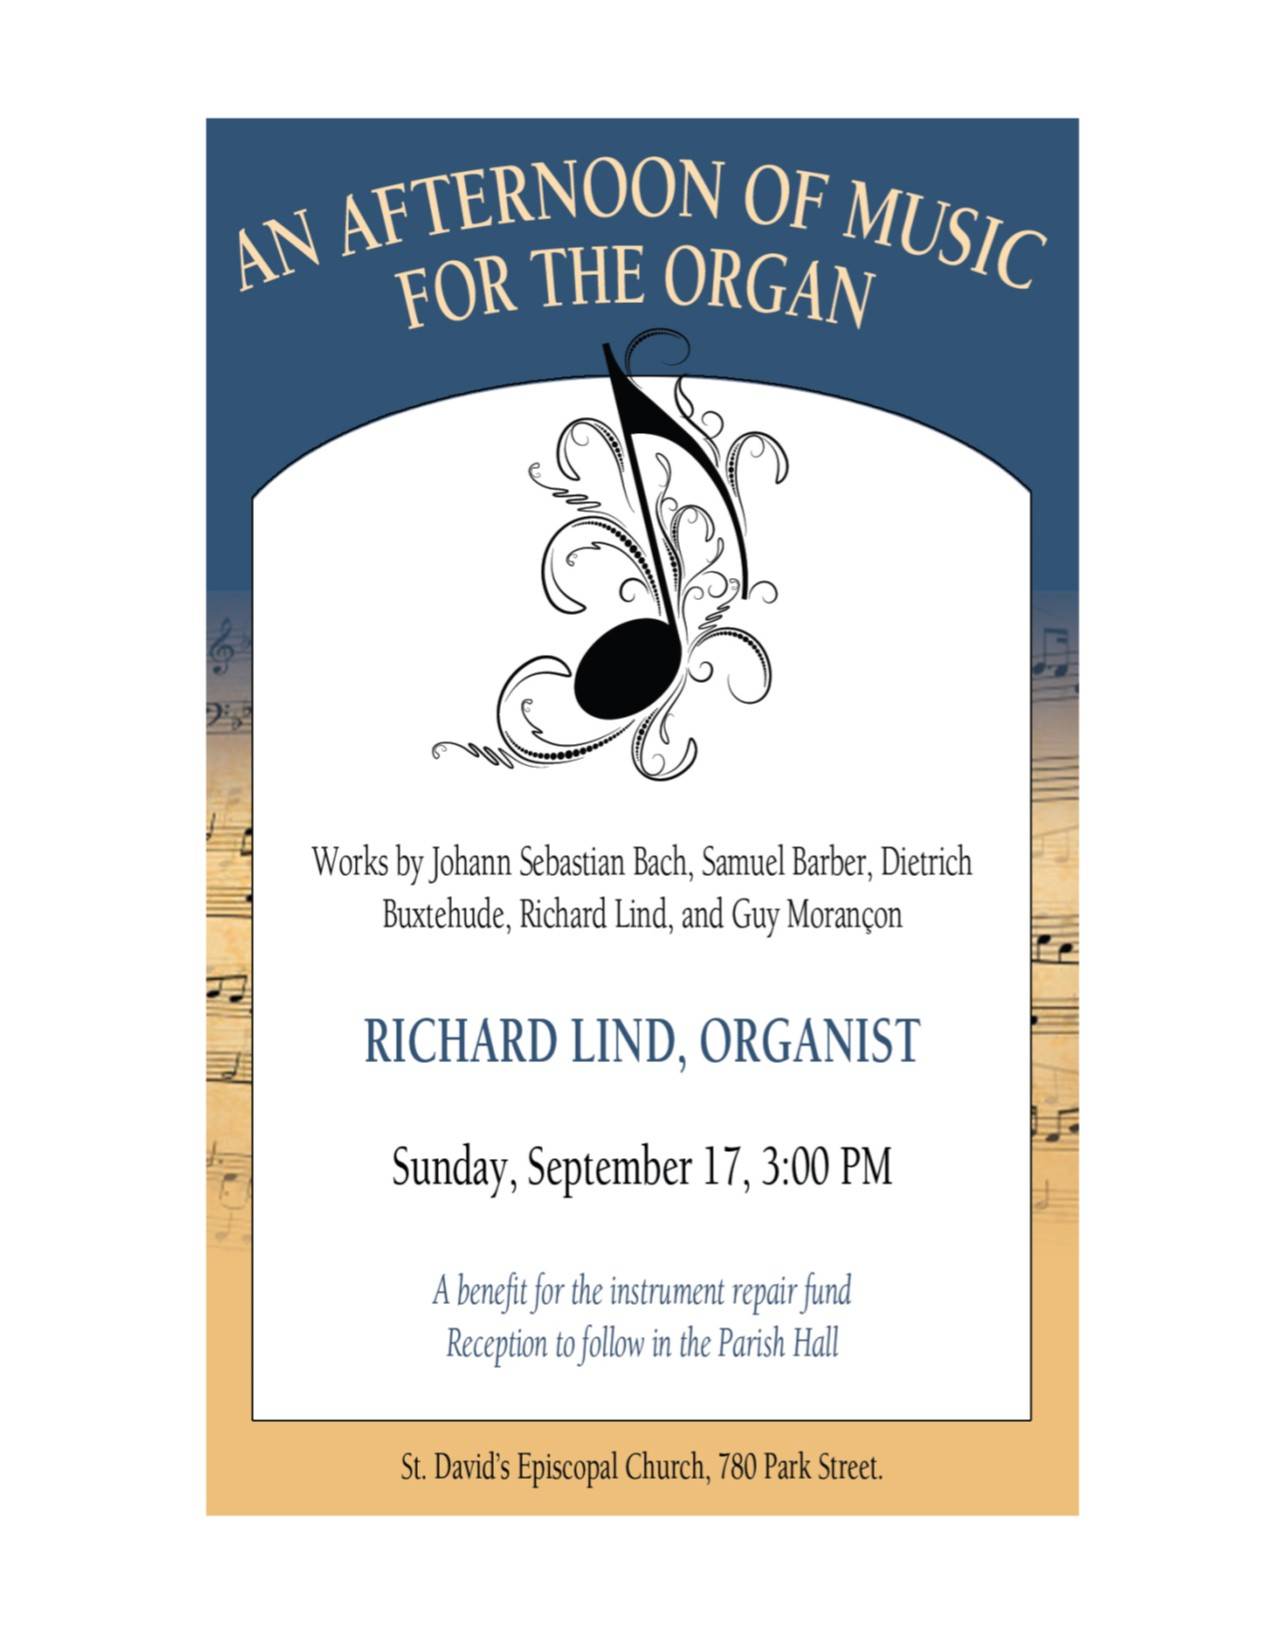 Organ concert at St. David’s